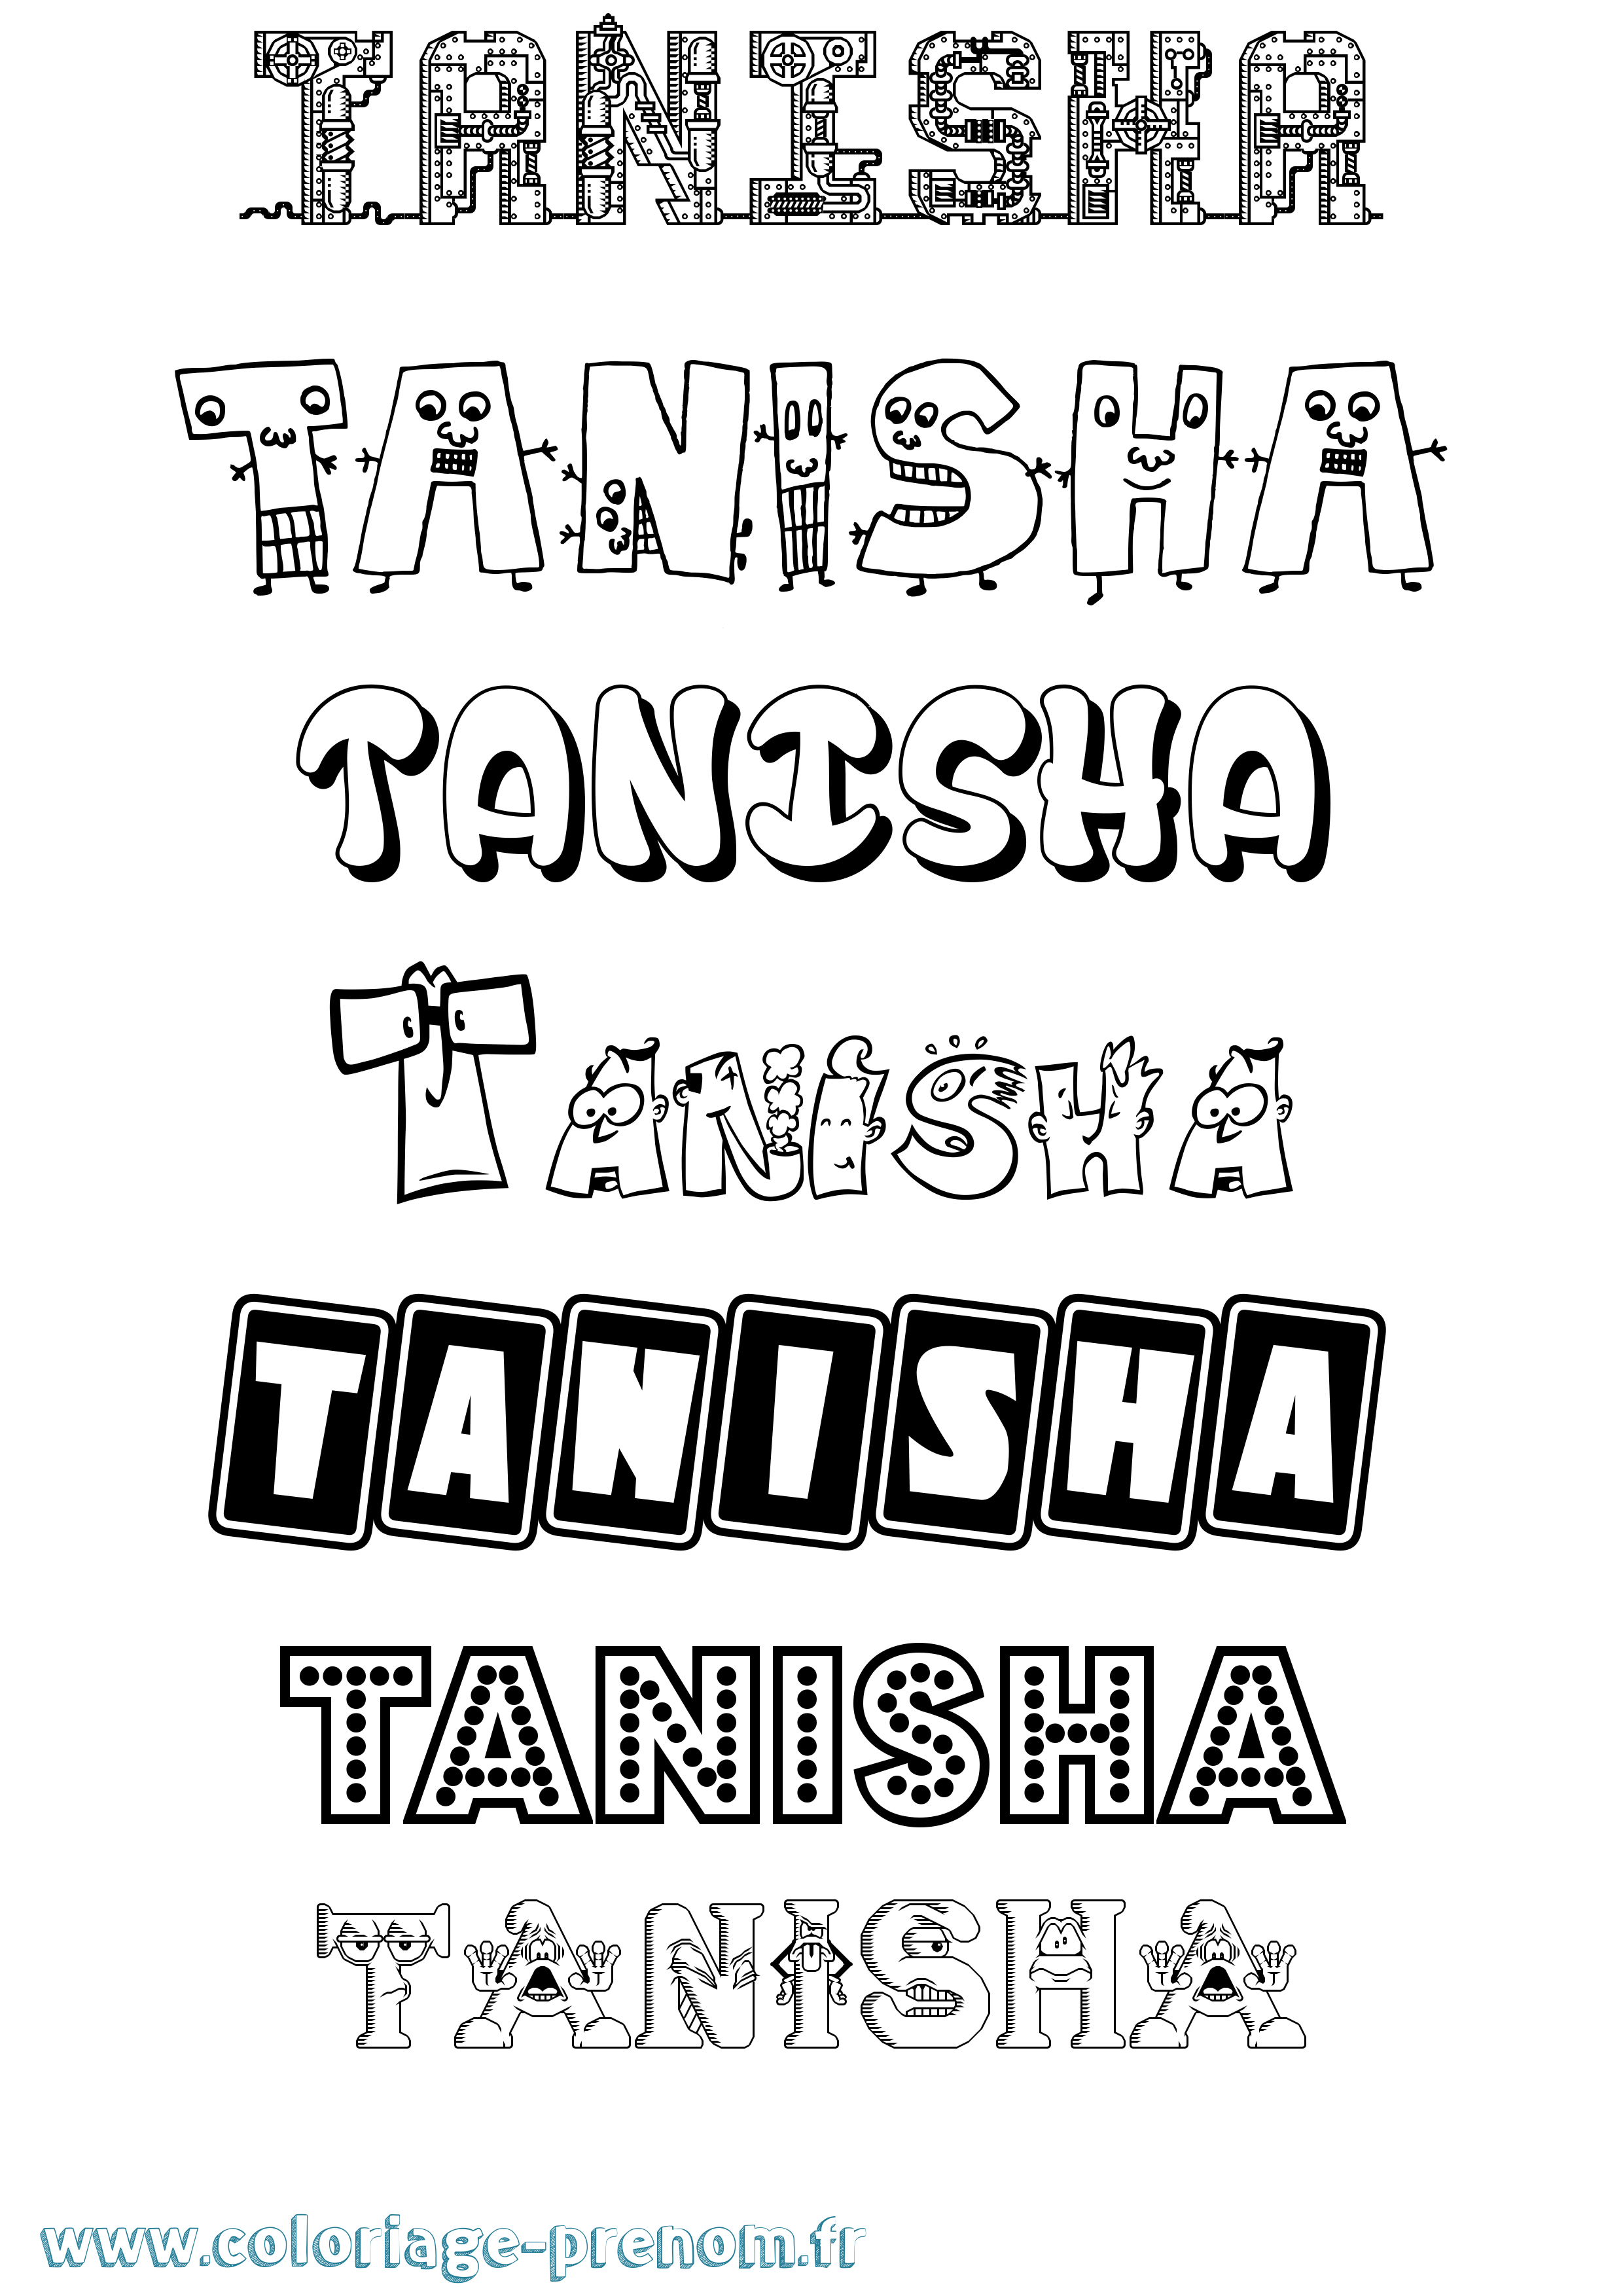 Coloriage prénom Tanisha Fun